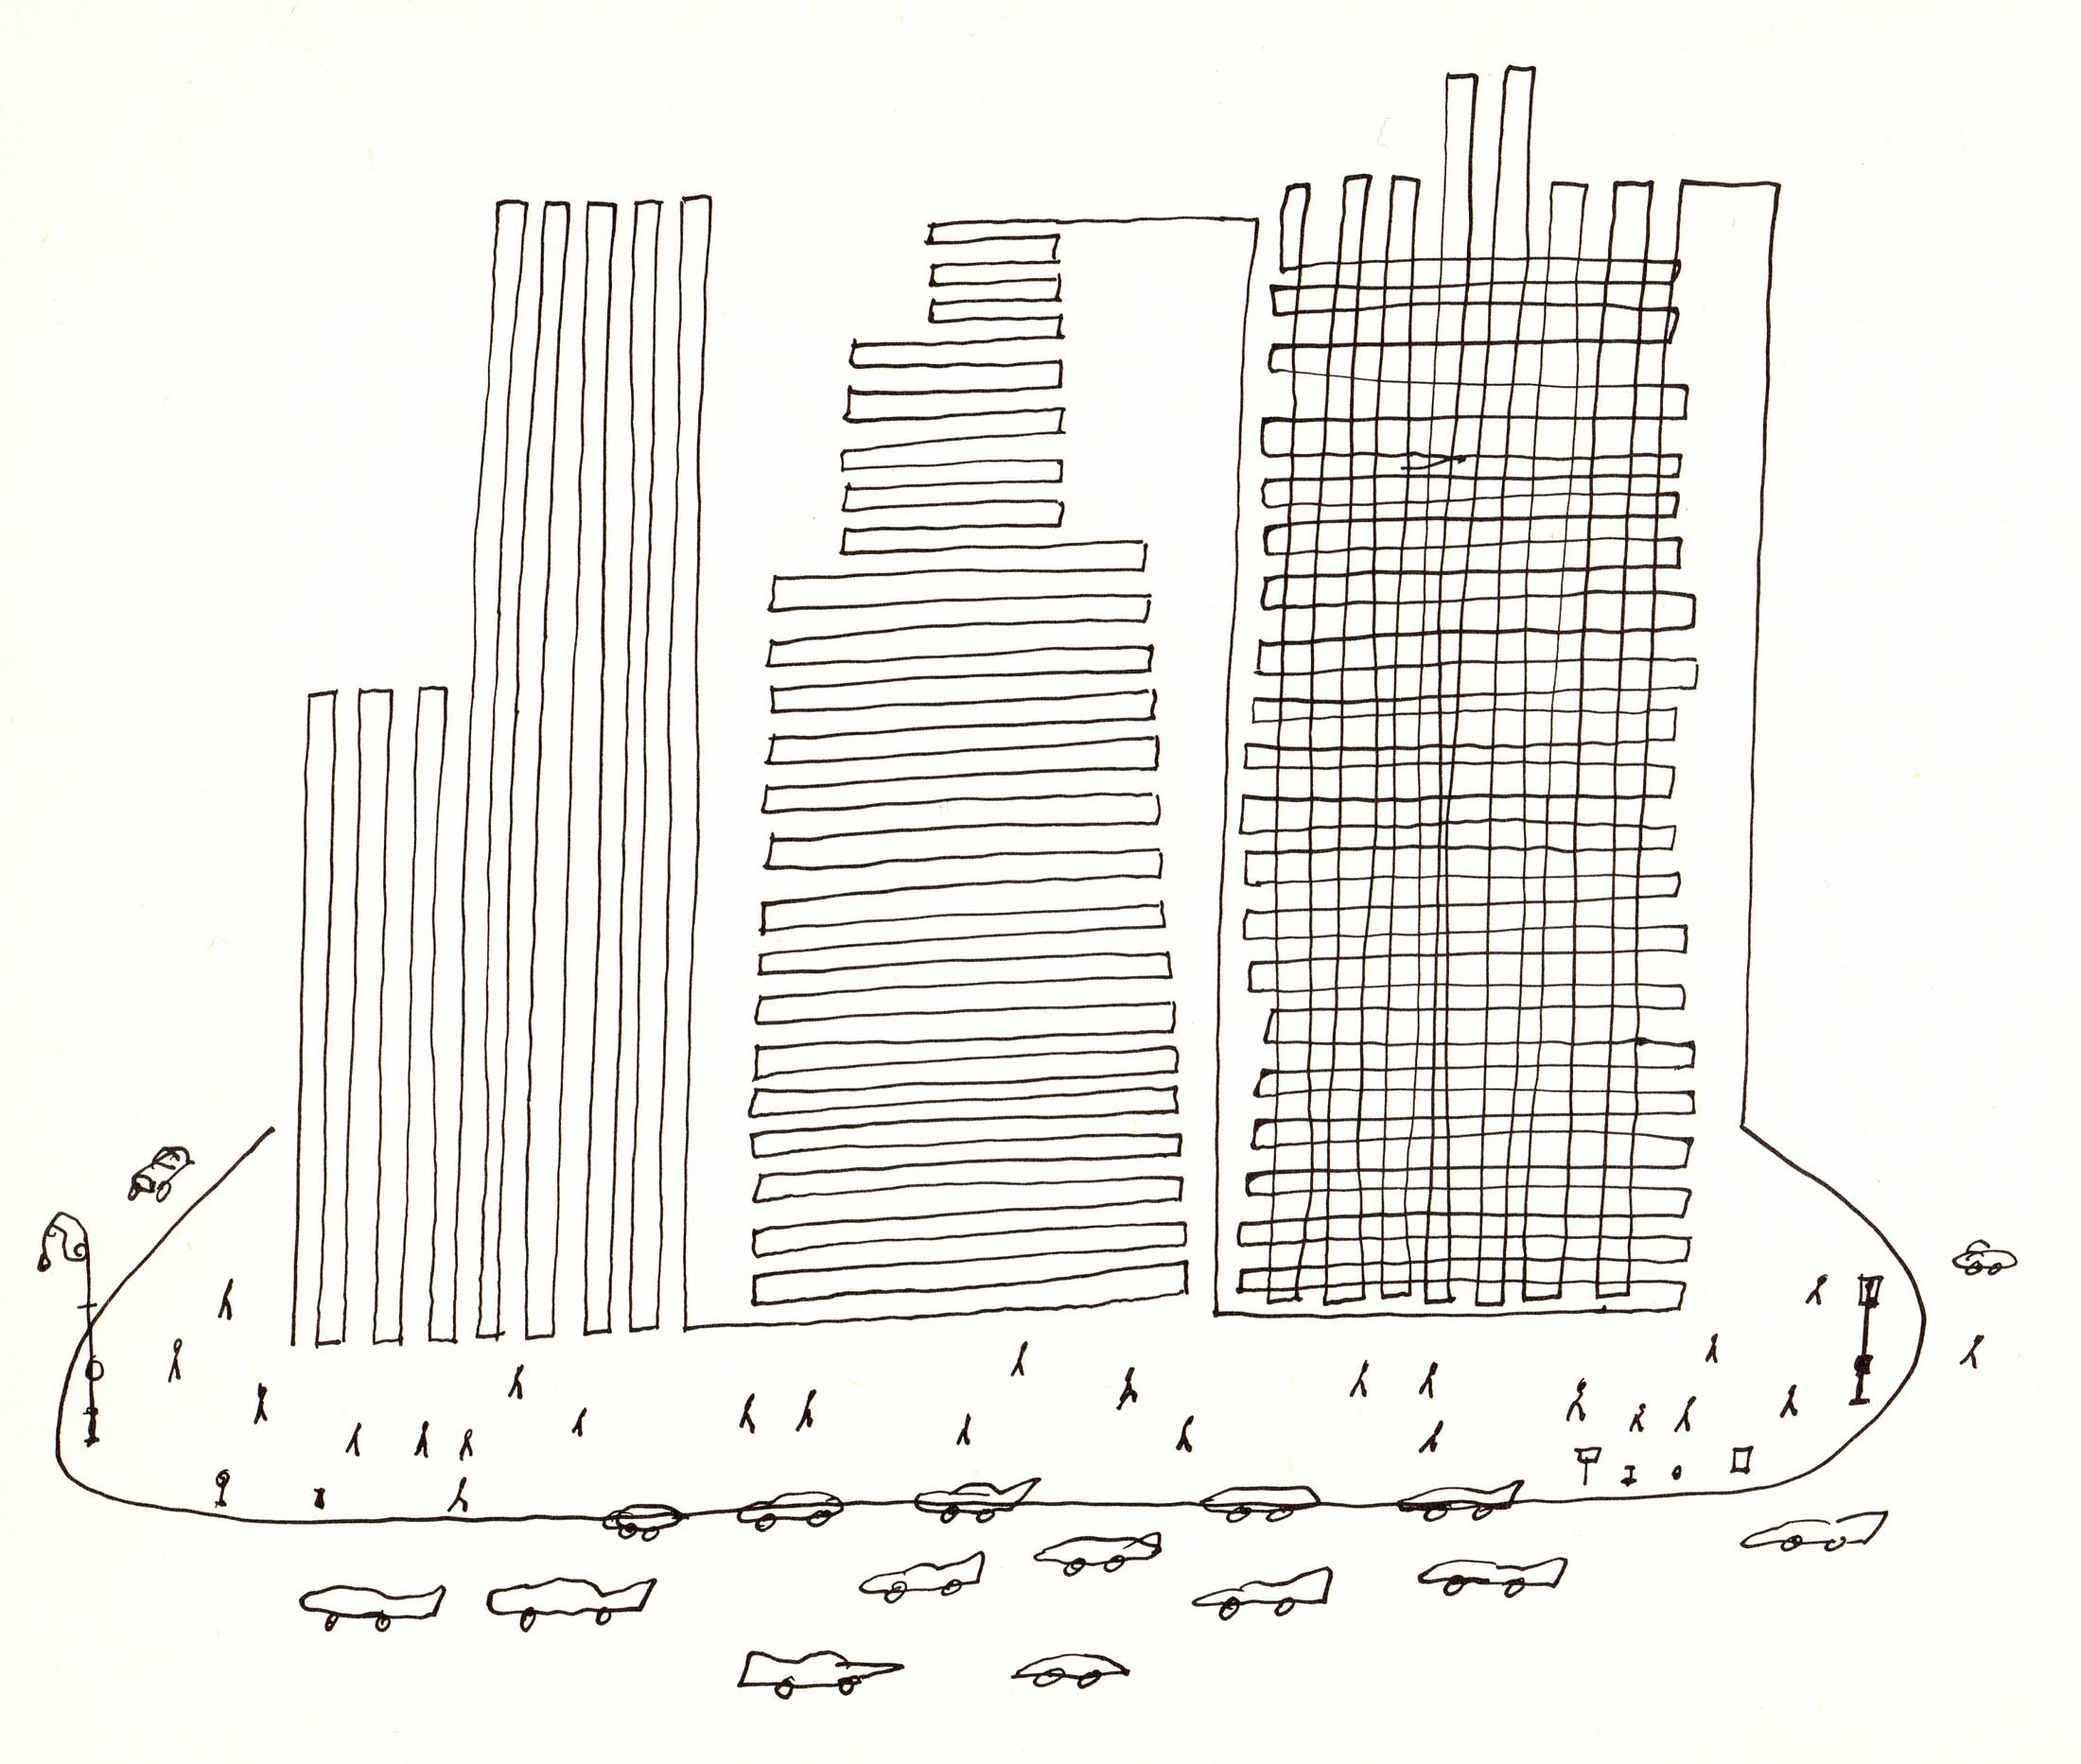 Drawing in <em>The New Yorker</em>, April 13, 1957.